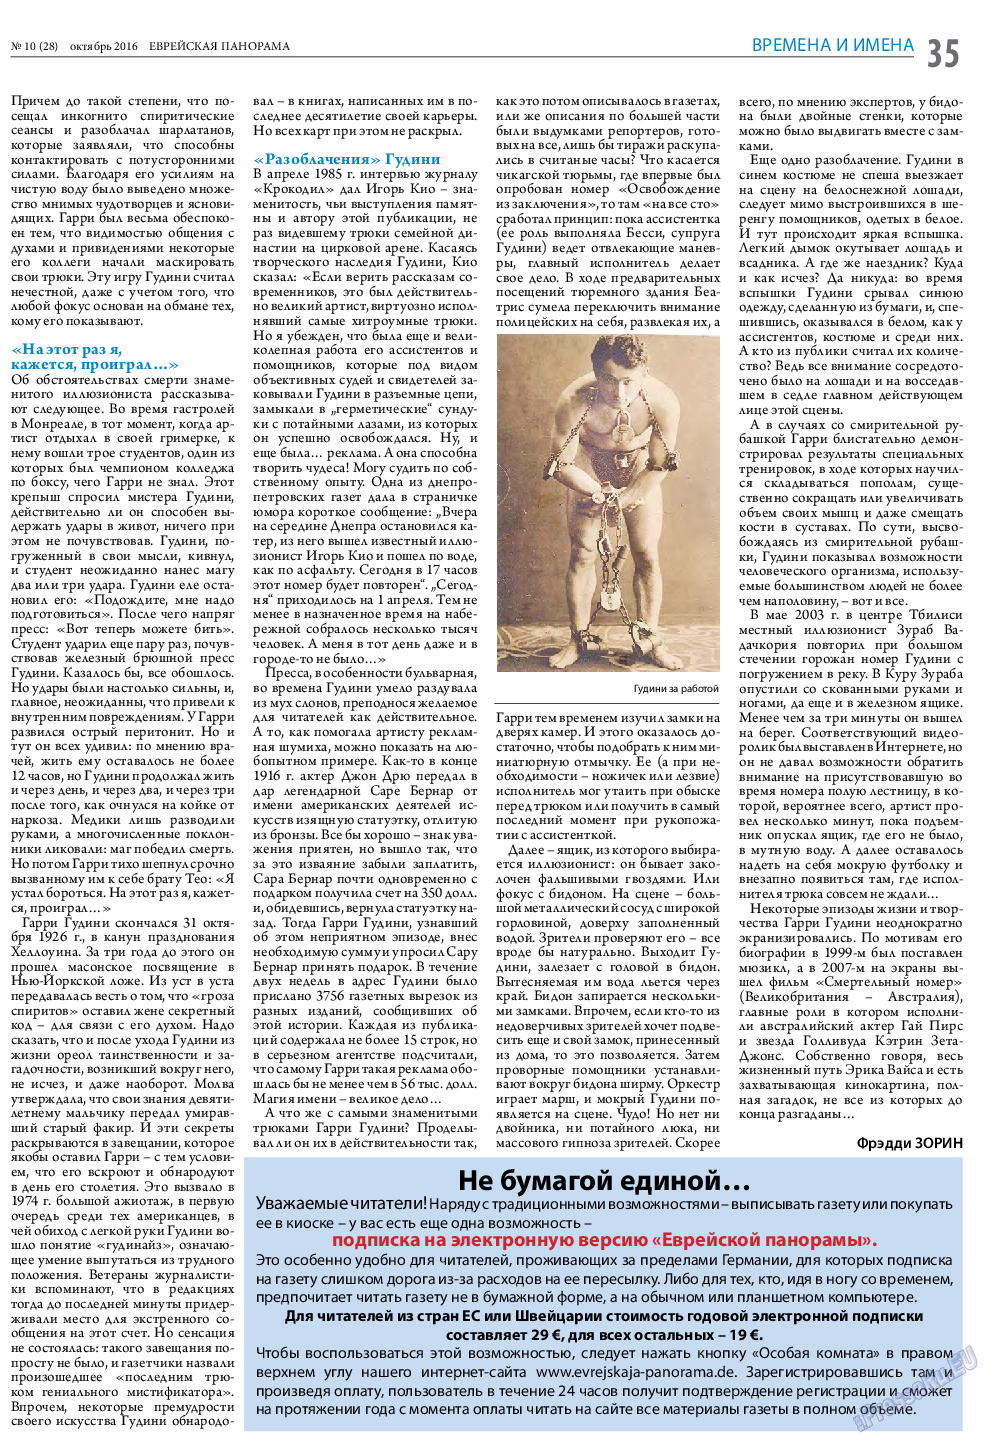 Еврейская панорама, газета. 2016 №10 стр.35